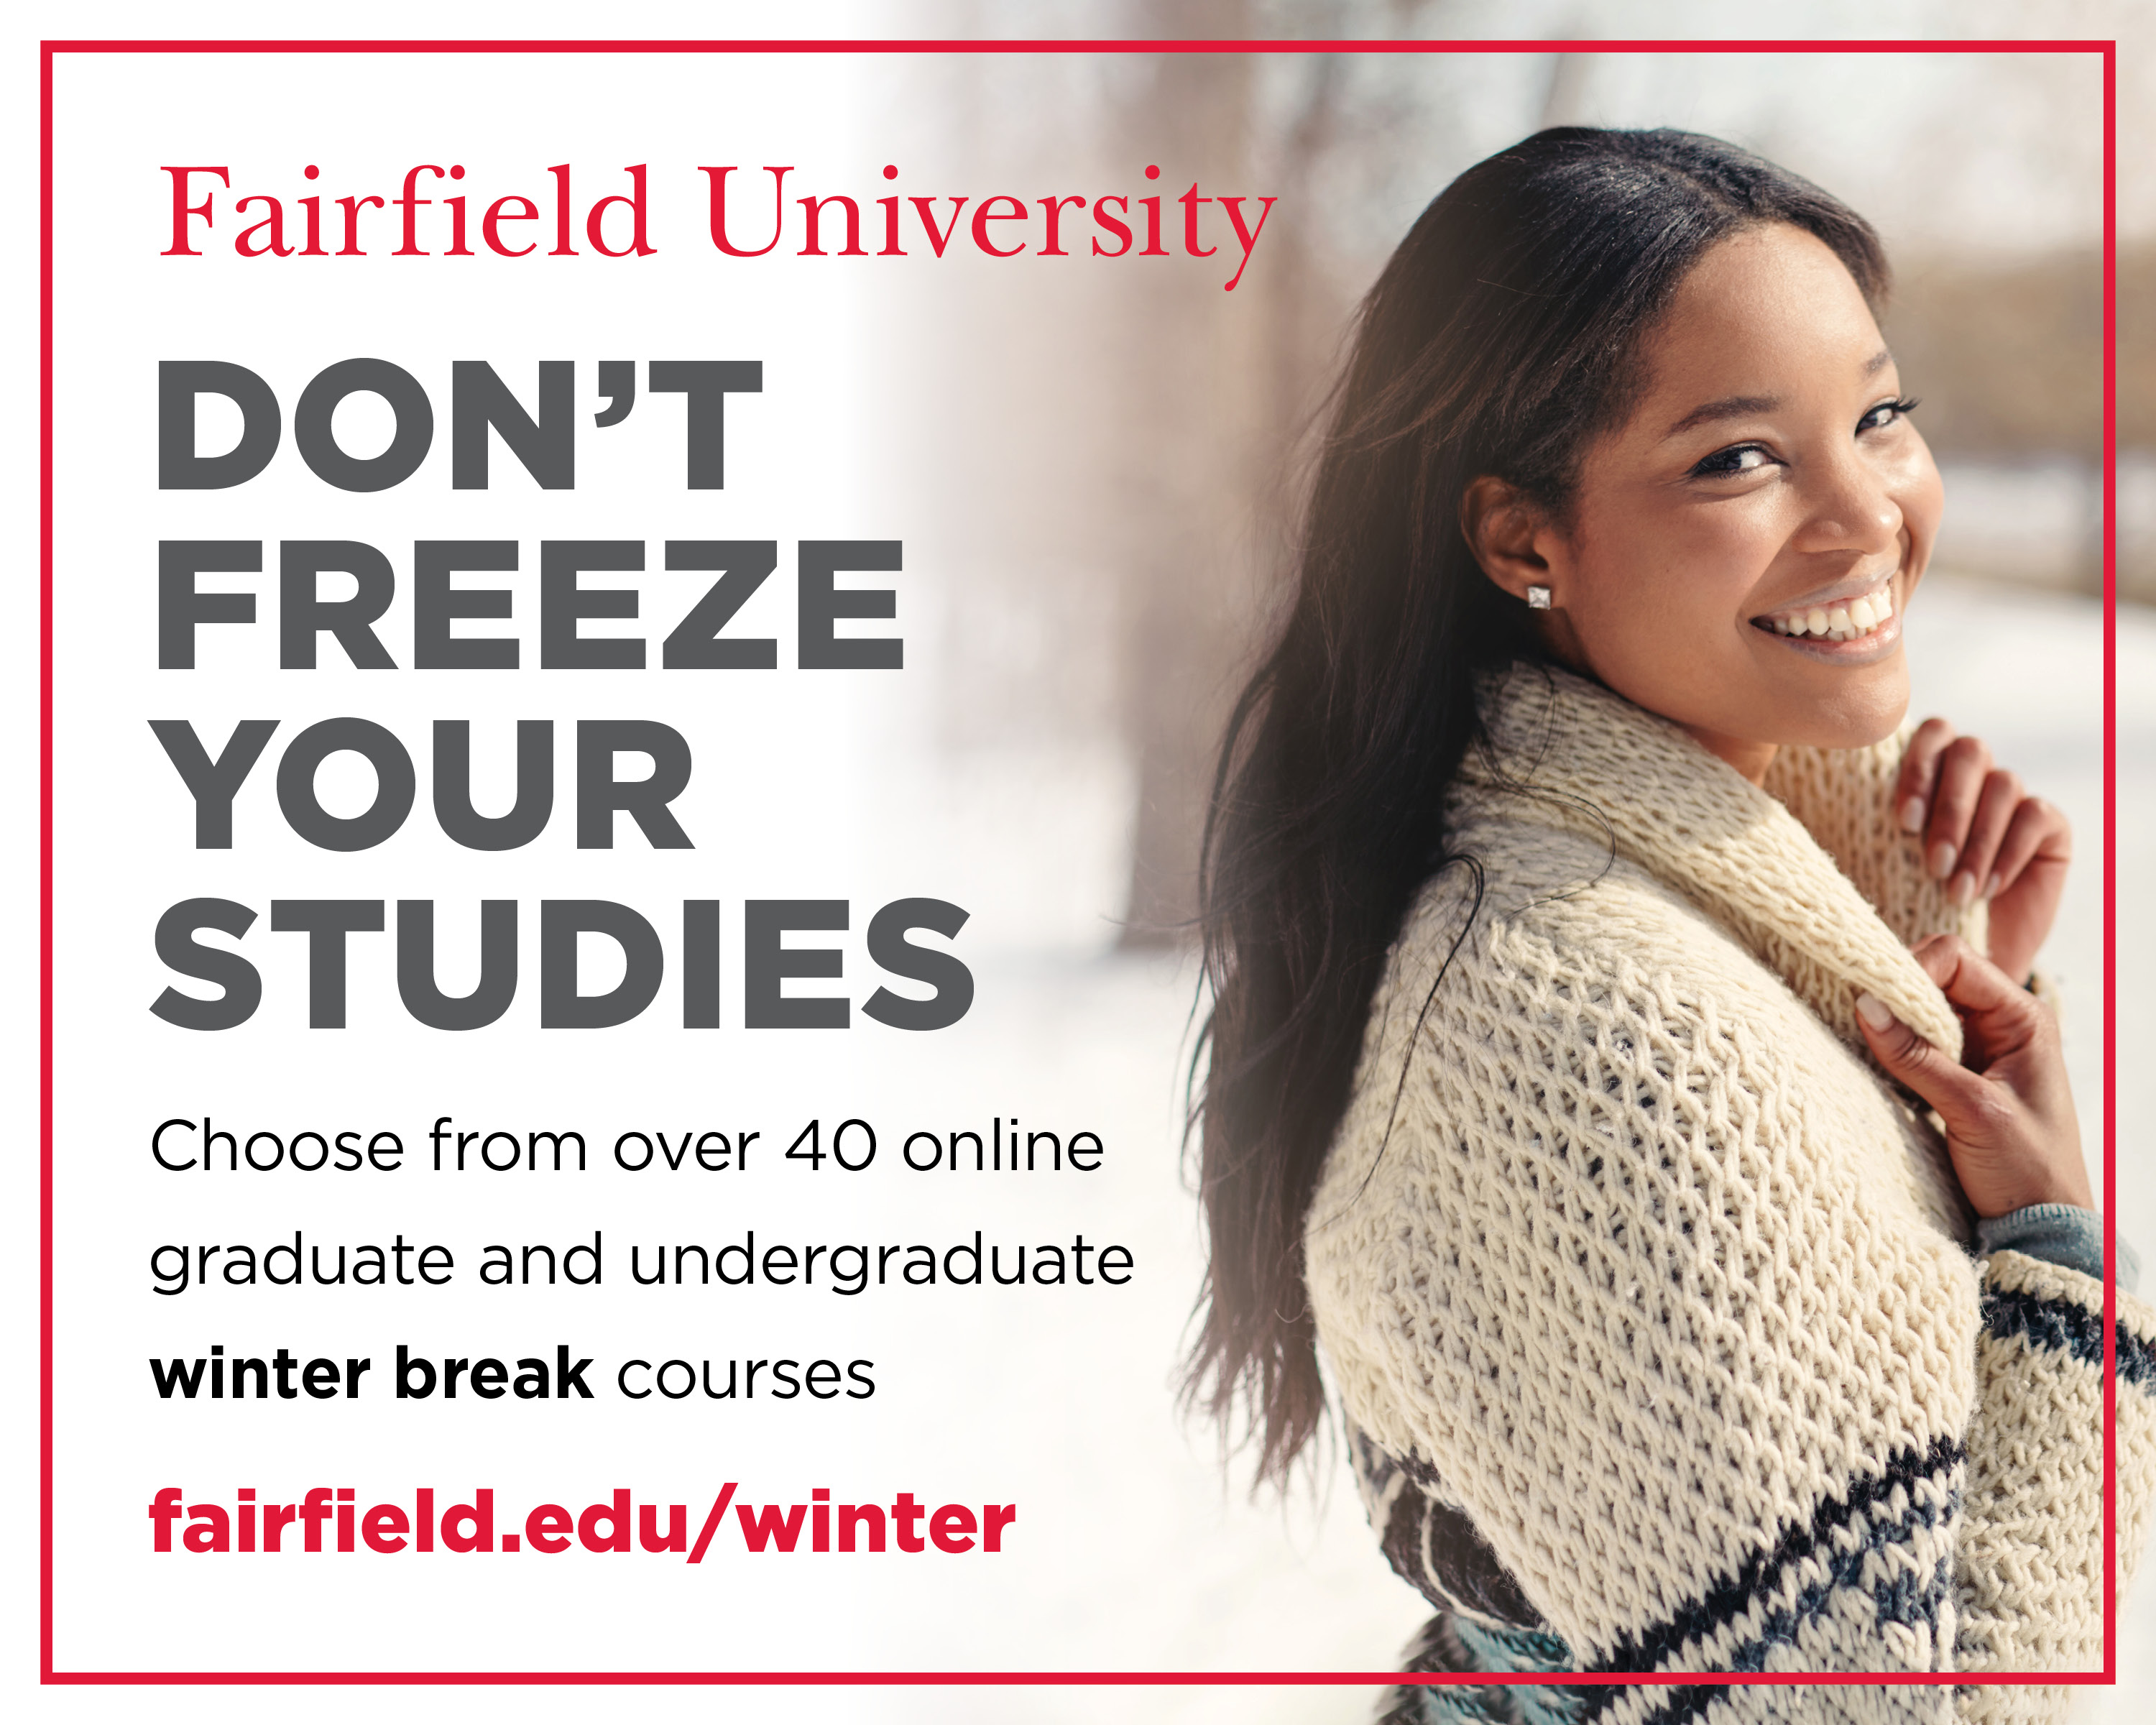 Winter Classes at Fairfield University!